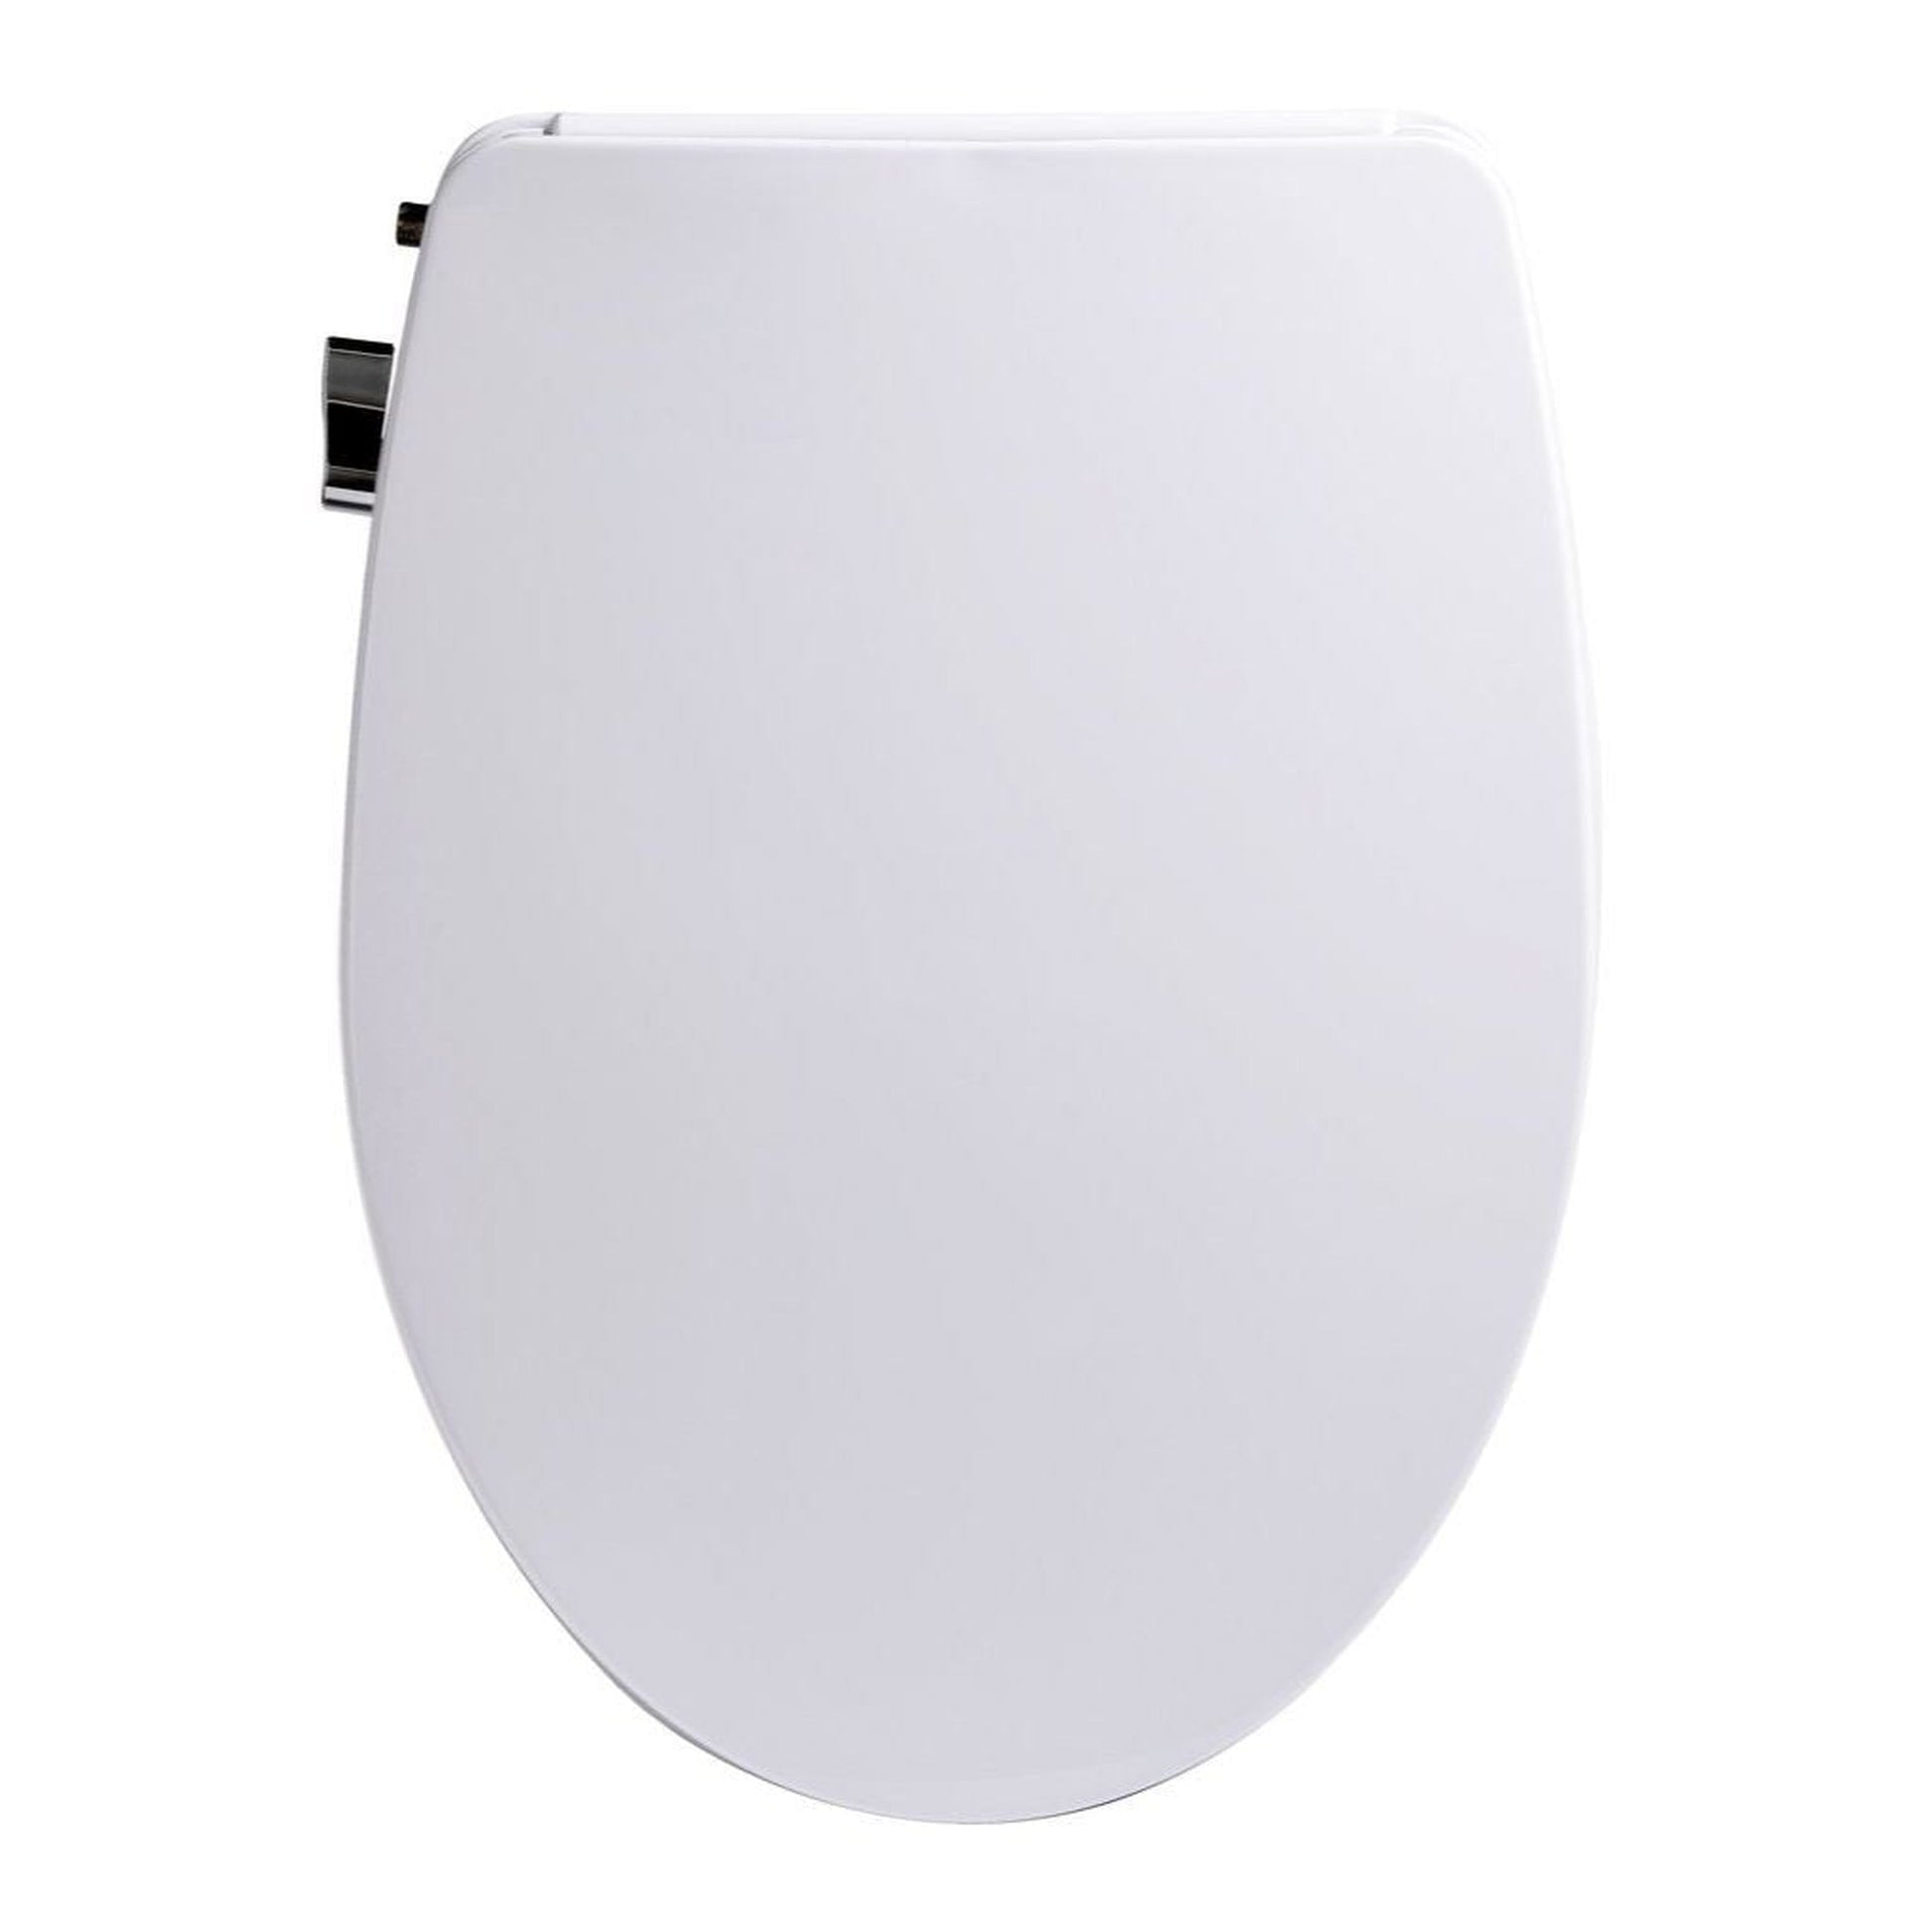 1pc Toilet Night Light Motion Sensor, 8-Color Changing Toilet Bowl Light,  LED Nightlight For Bathroom Decor, Bathroom Accessories